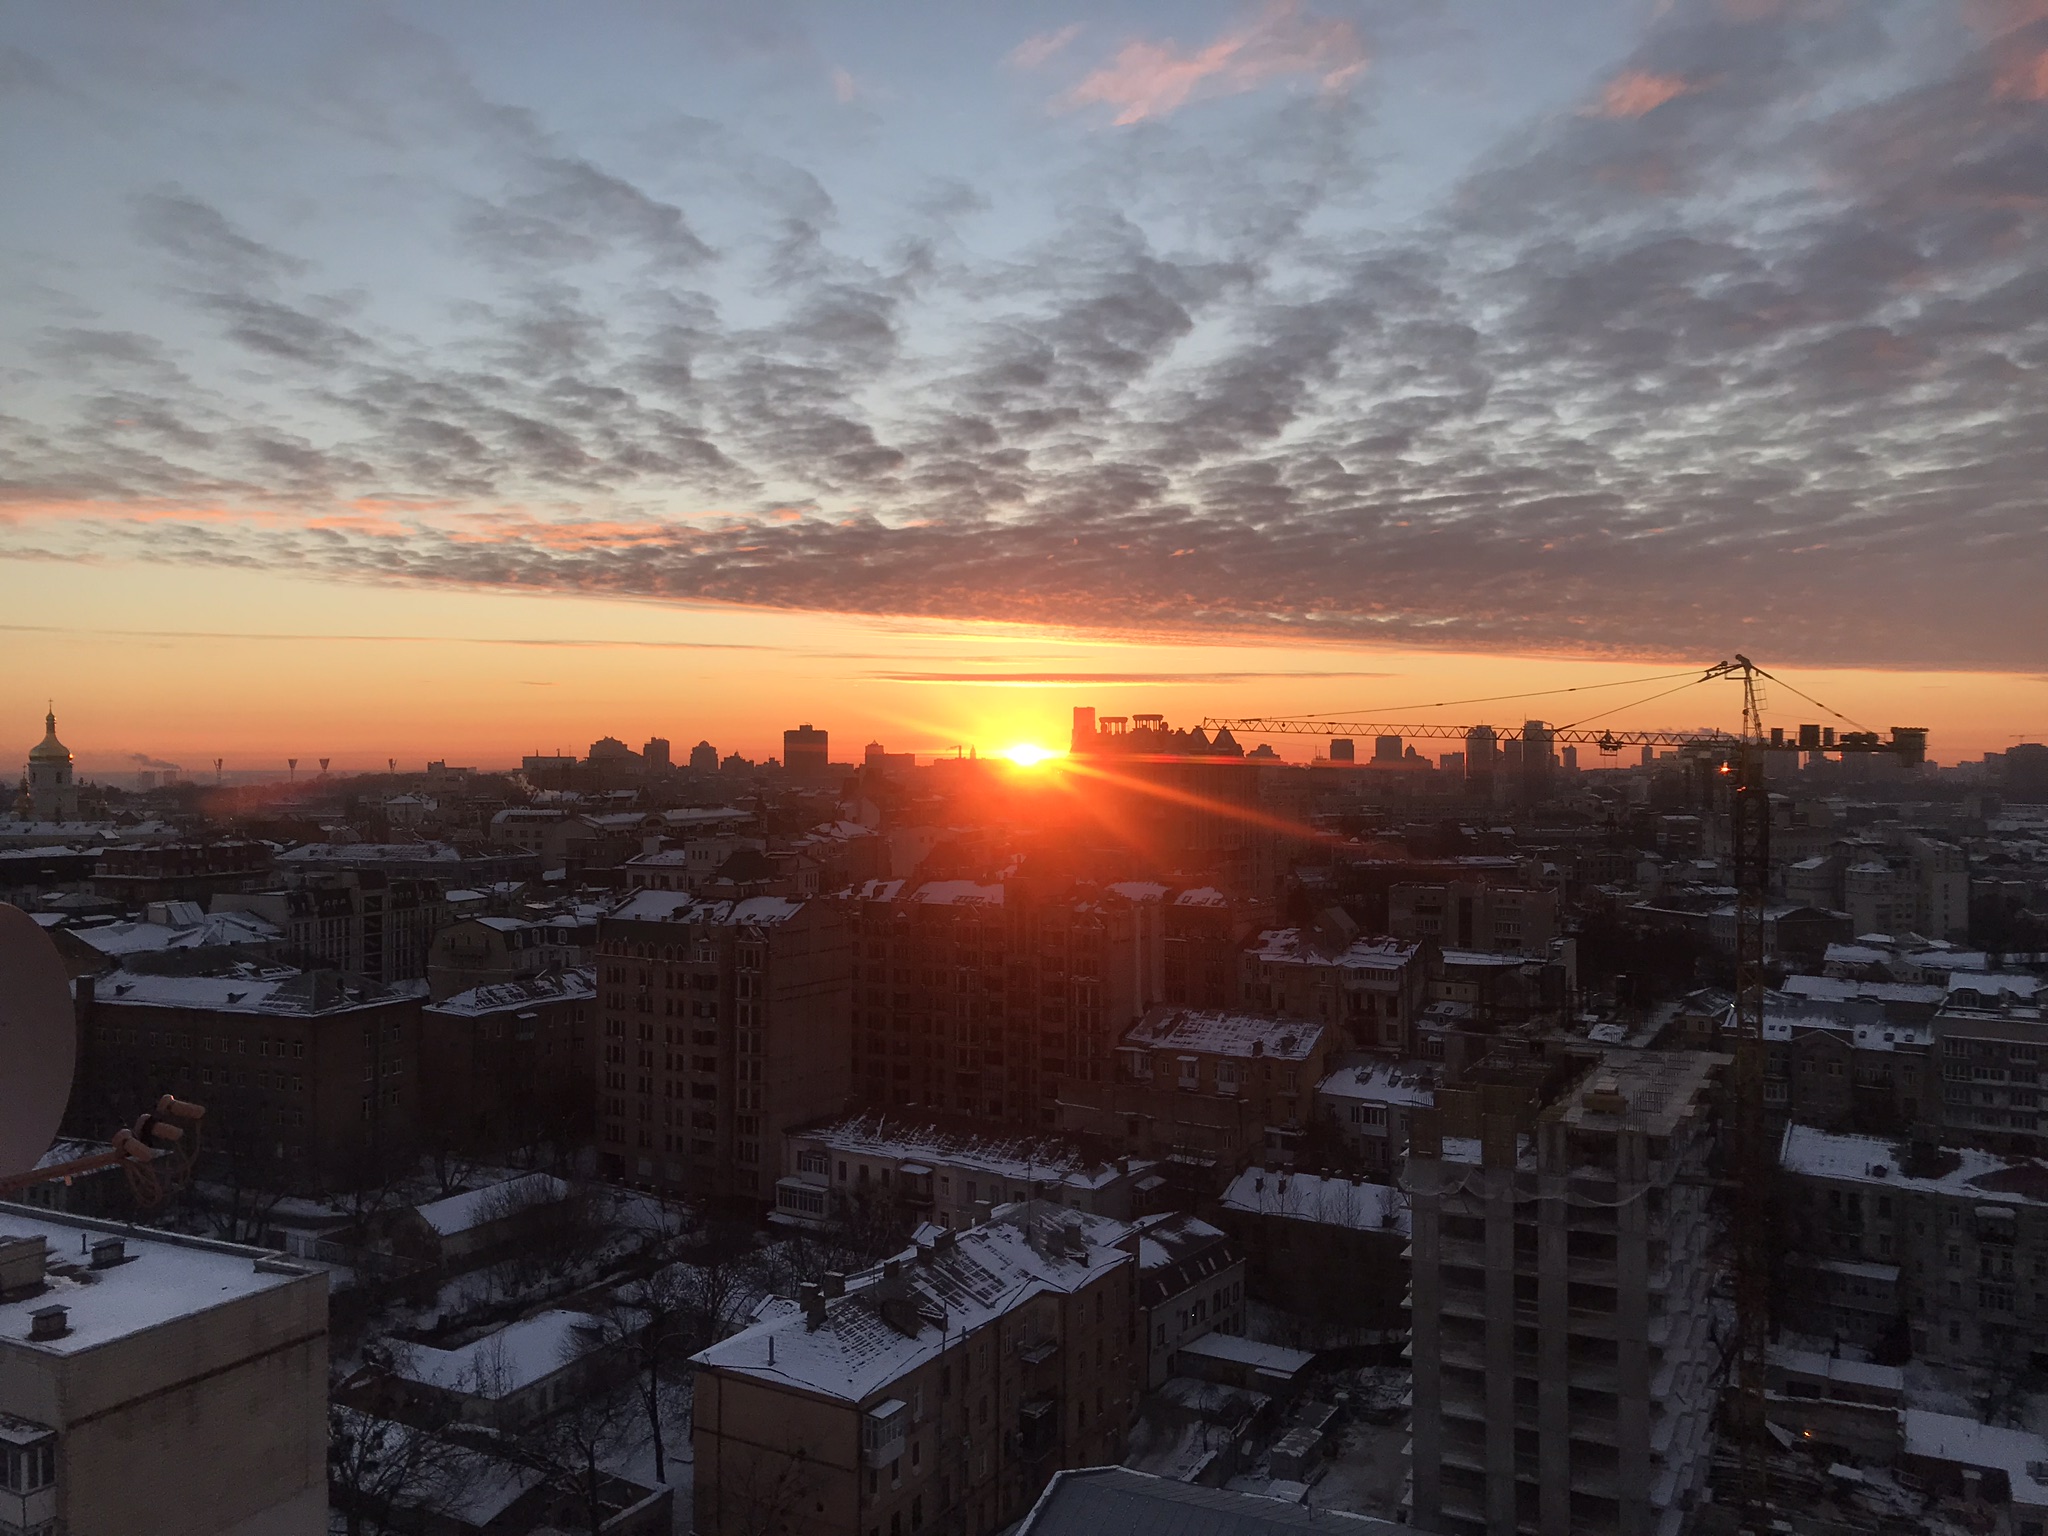 Another beautiful sunset in Kyiv, Ukraine